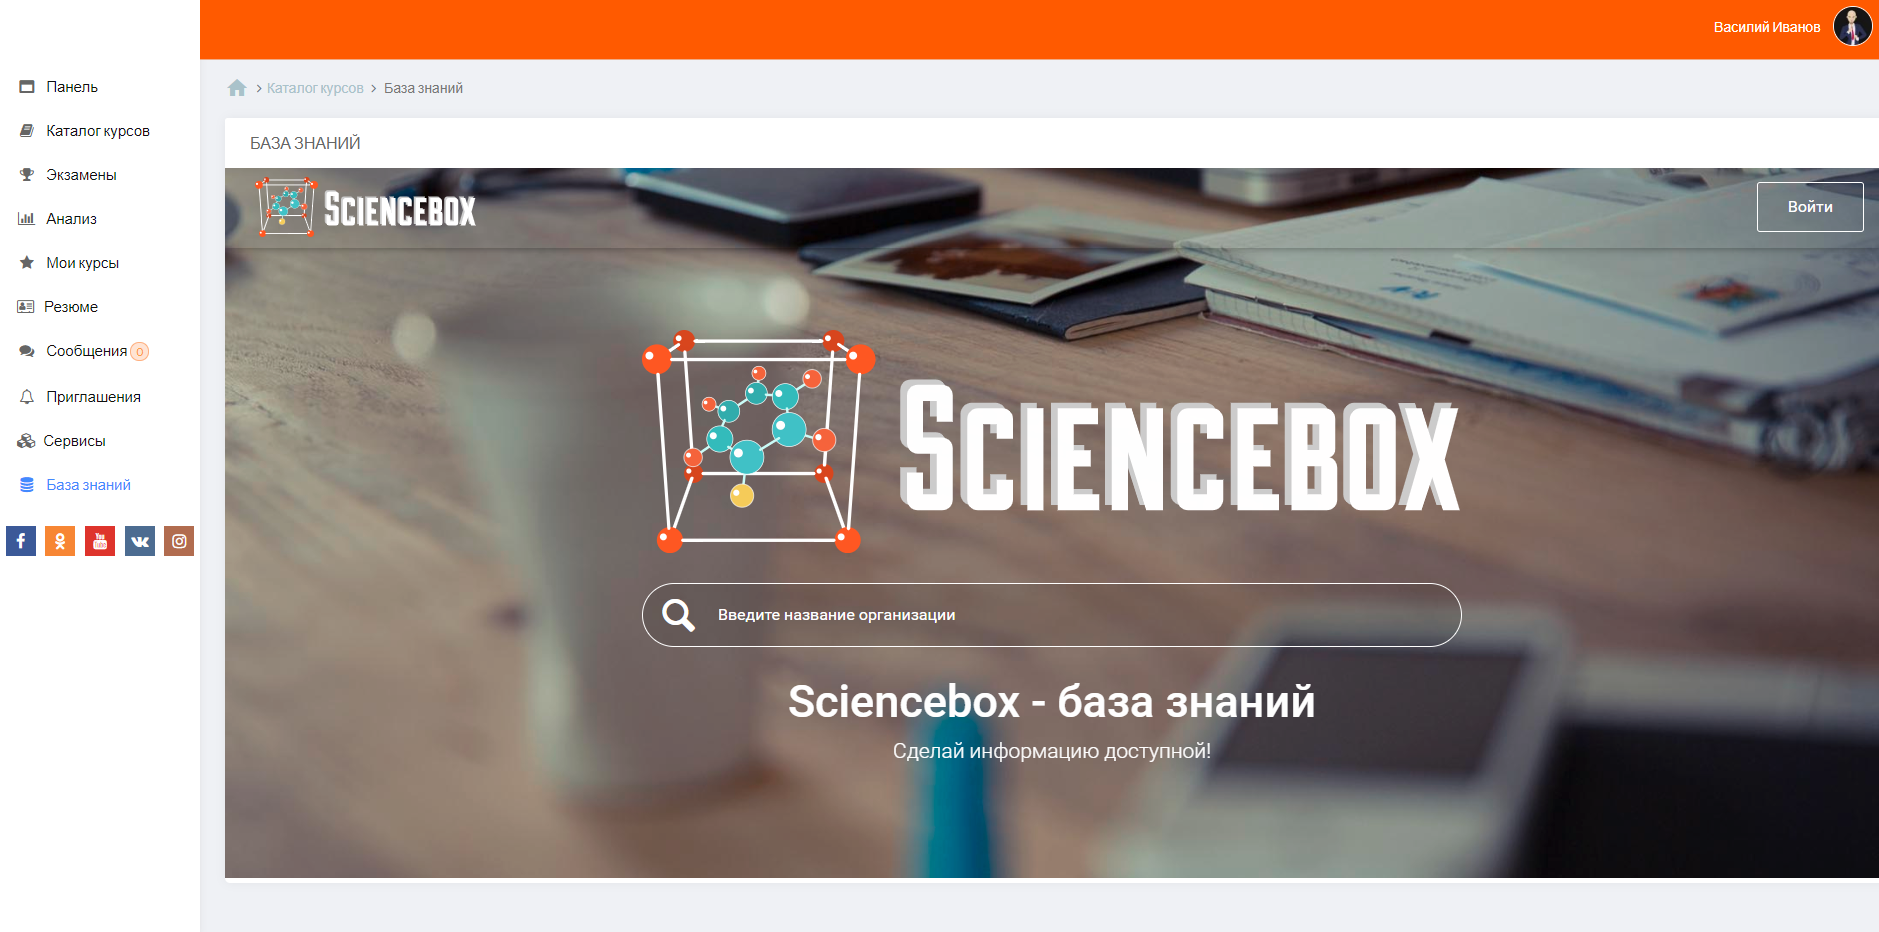 Academiait.ru – Бесплатная онлайн академия IT открыта (пример).